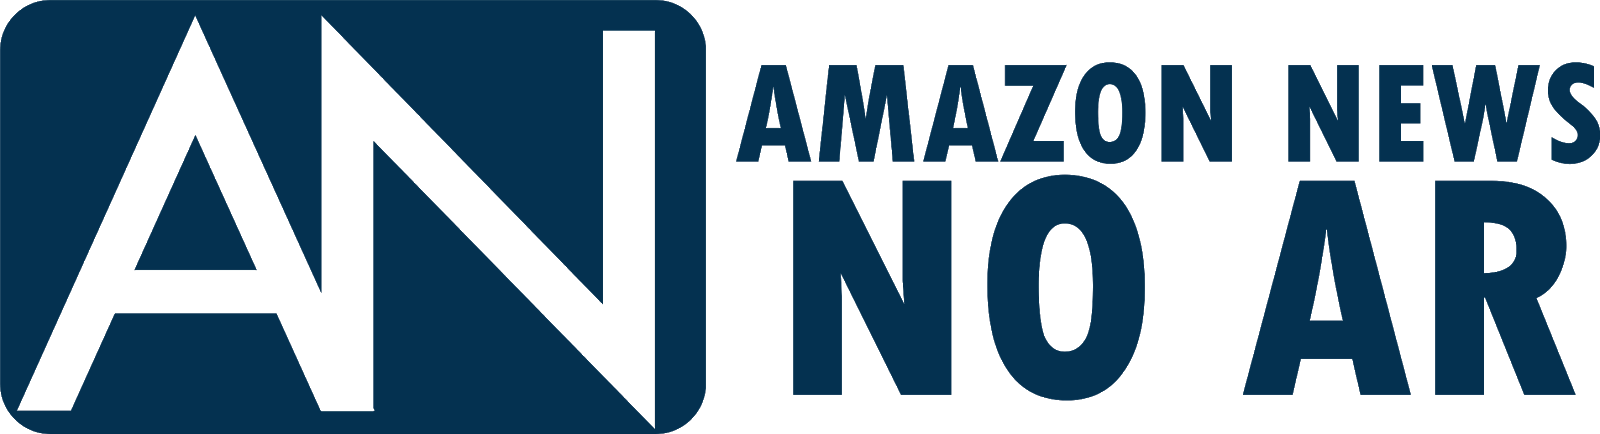 AMAZON NEWS NO AR 